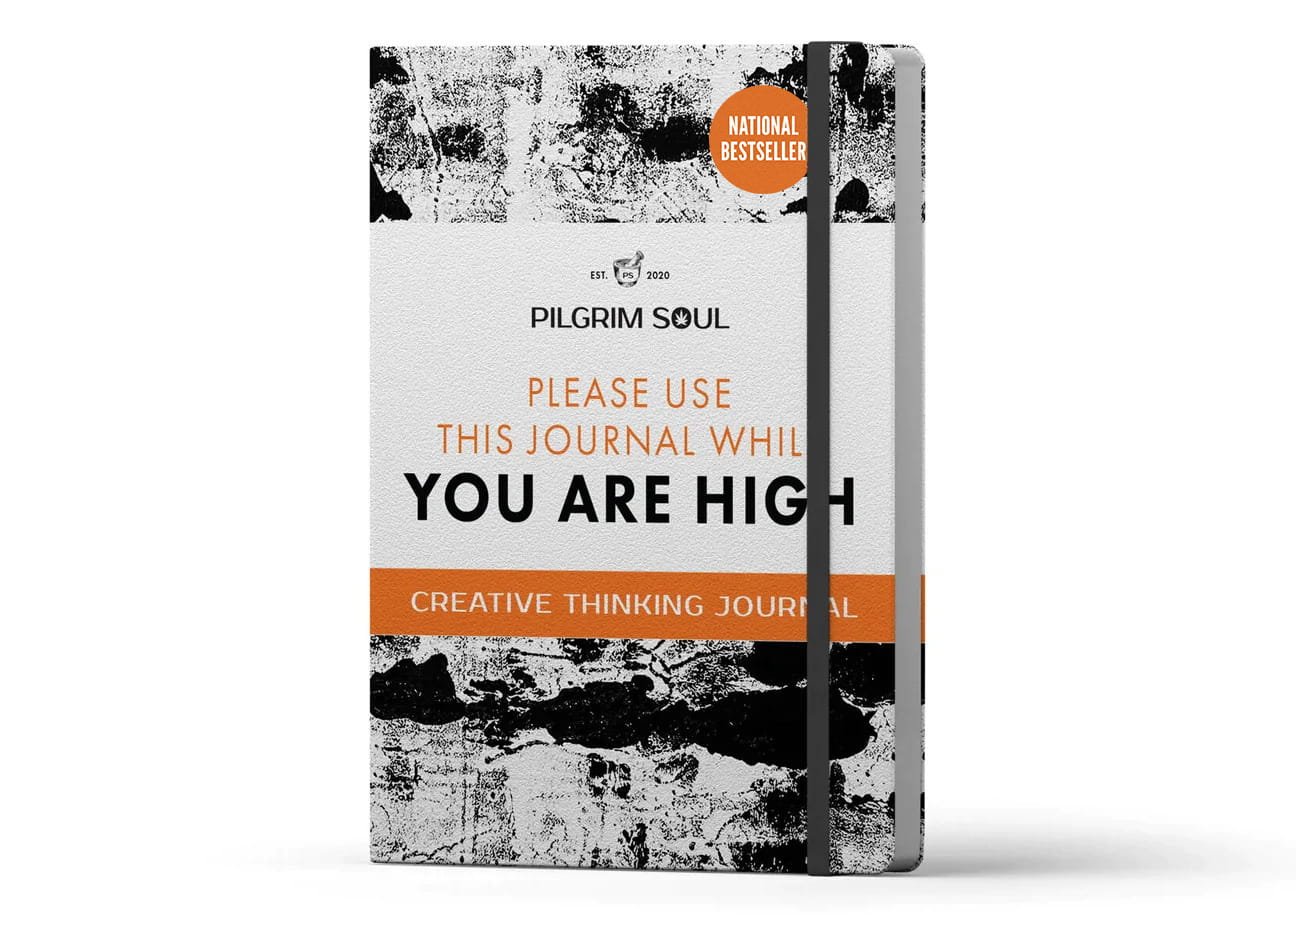 Coloring Book Vol 1 + Creative Thinking Journal Vol 2 + Pencil Set —  PILGRIM SOUL CREATIVE